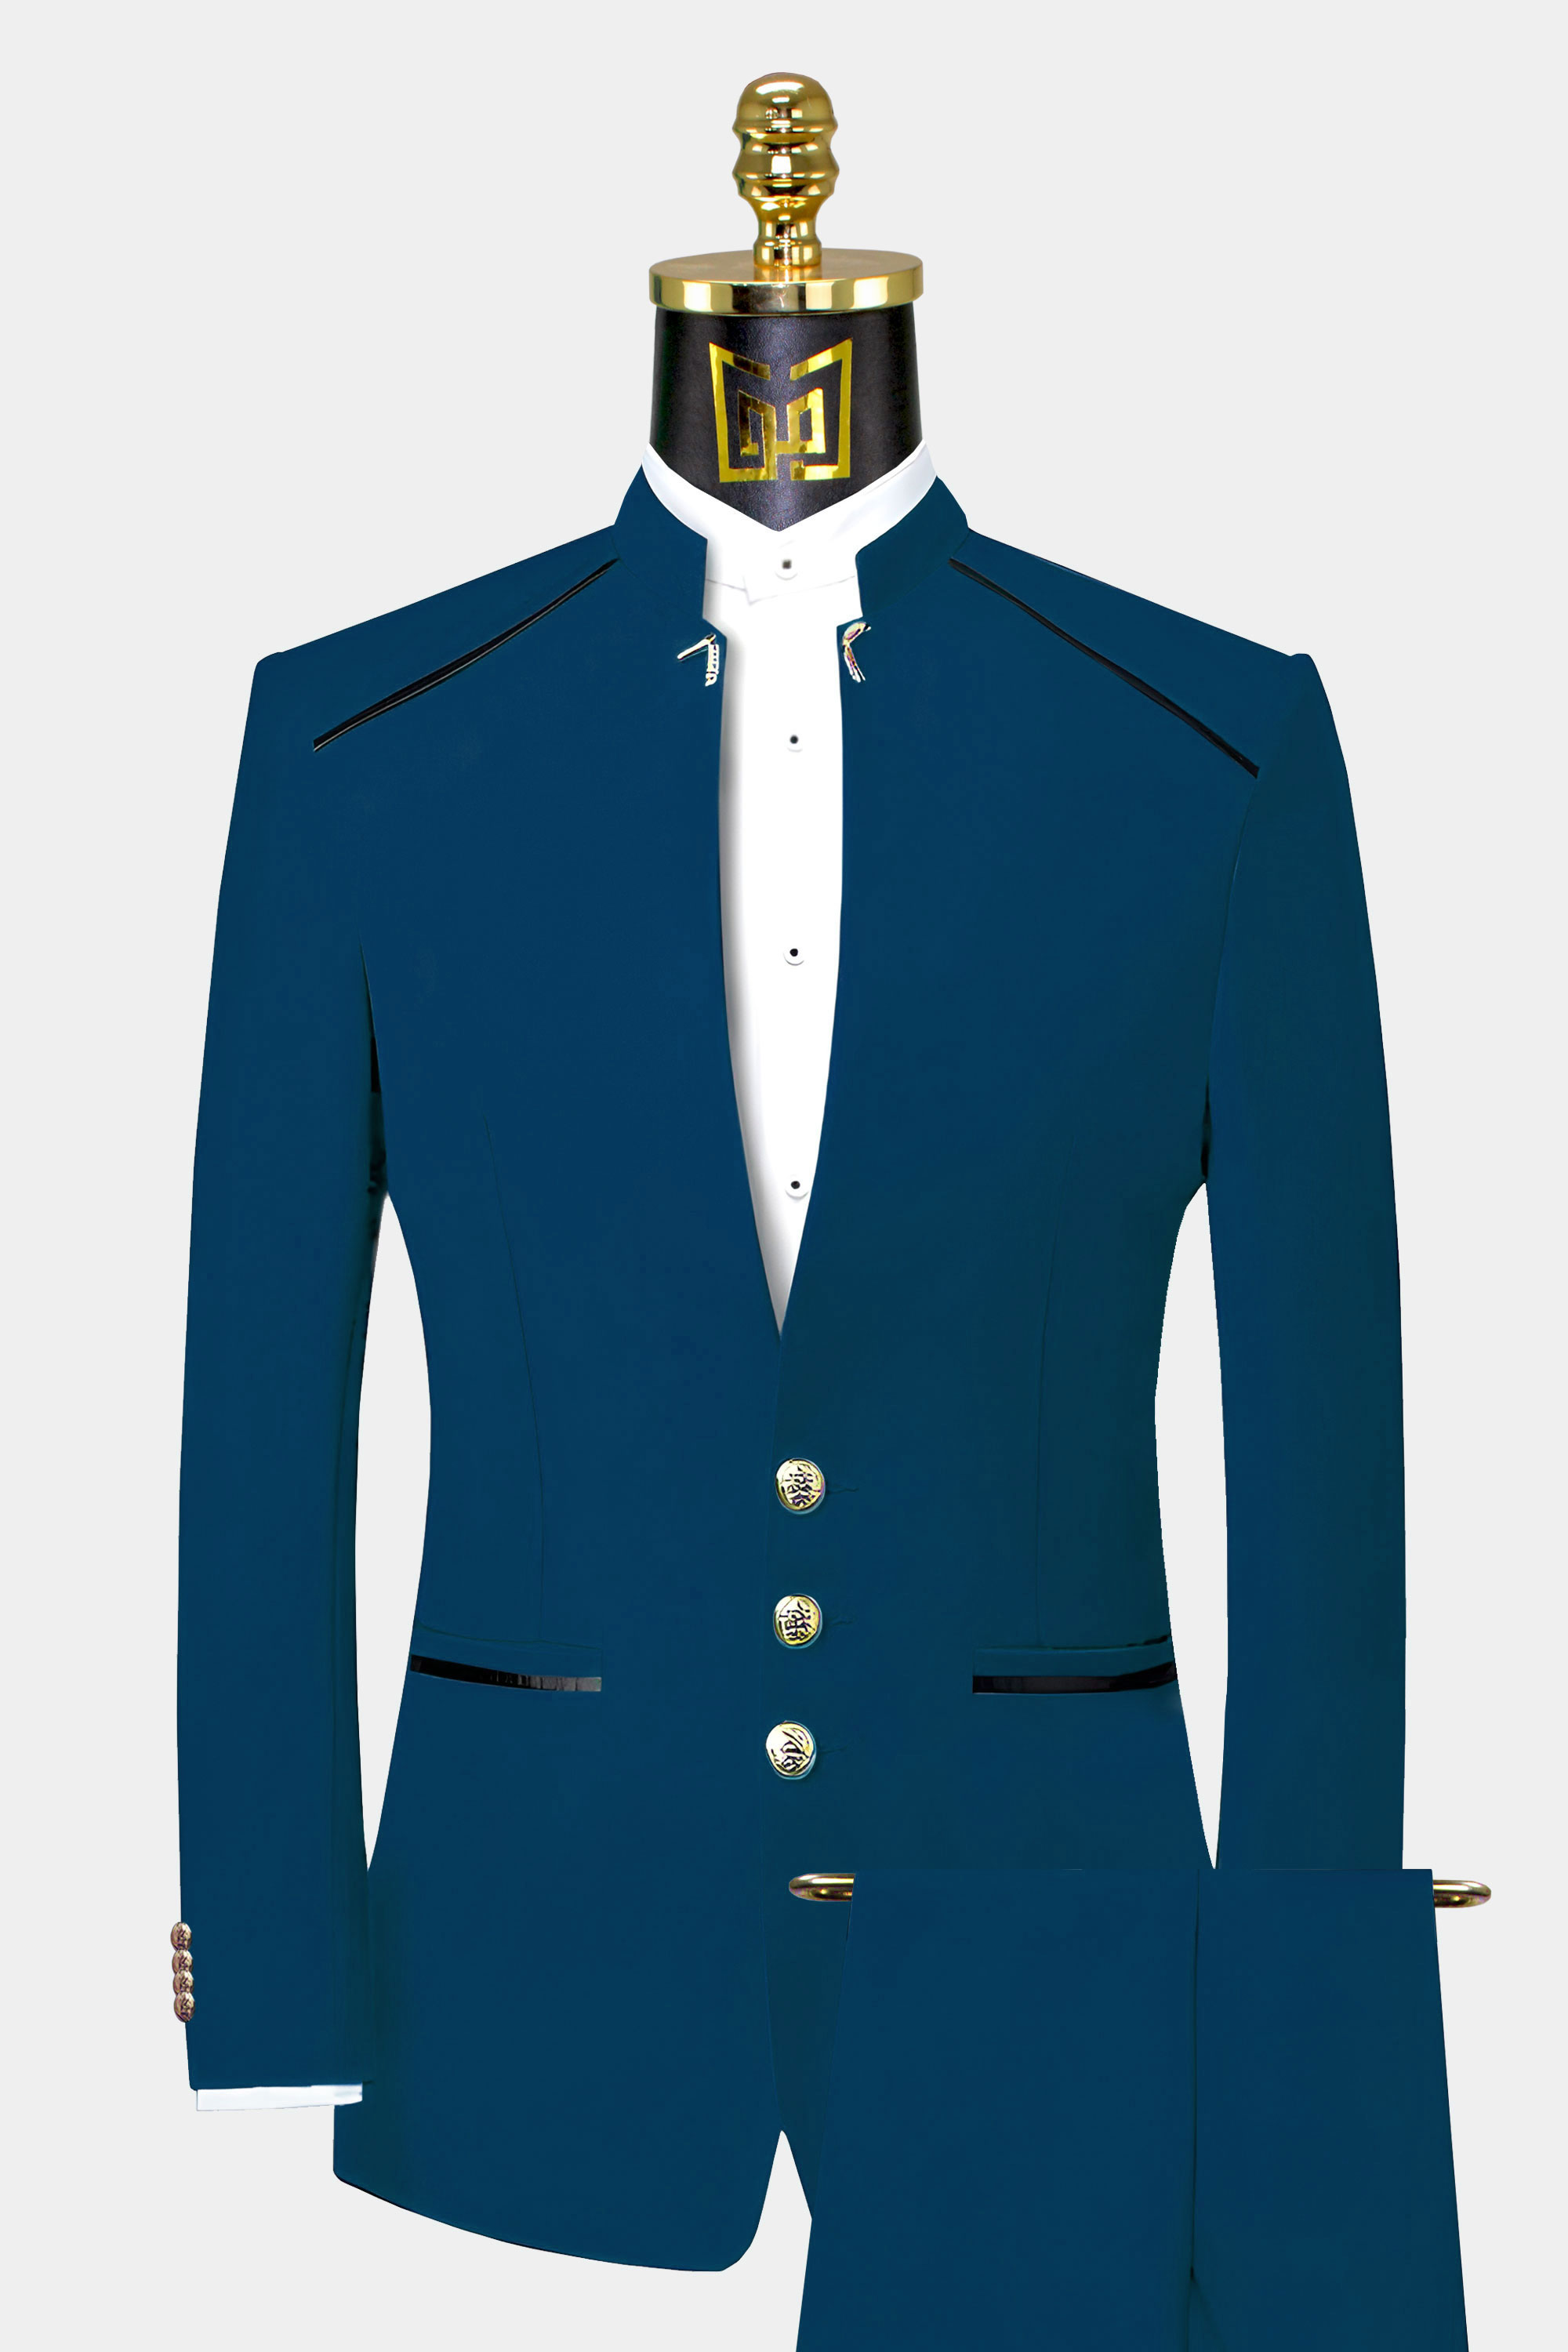 Teal-Blue-Mandarin-Collar-Suit-Wedding-Groom-Turtle-Neck-Chinese-Collar-Mao-Prom-Suit-from-Gentlemansguru.com.com